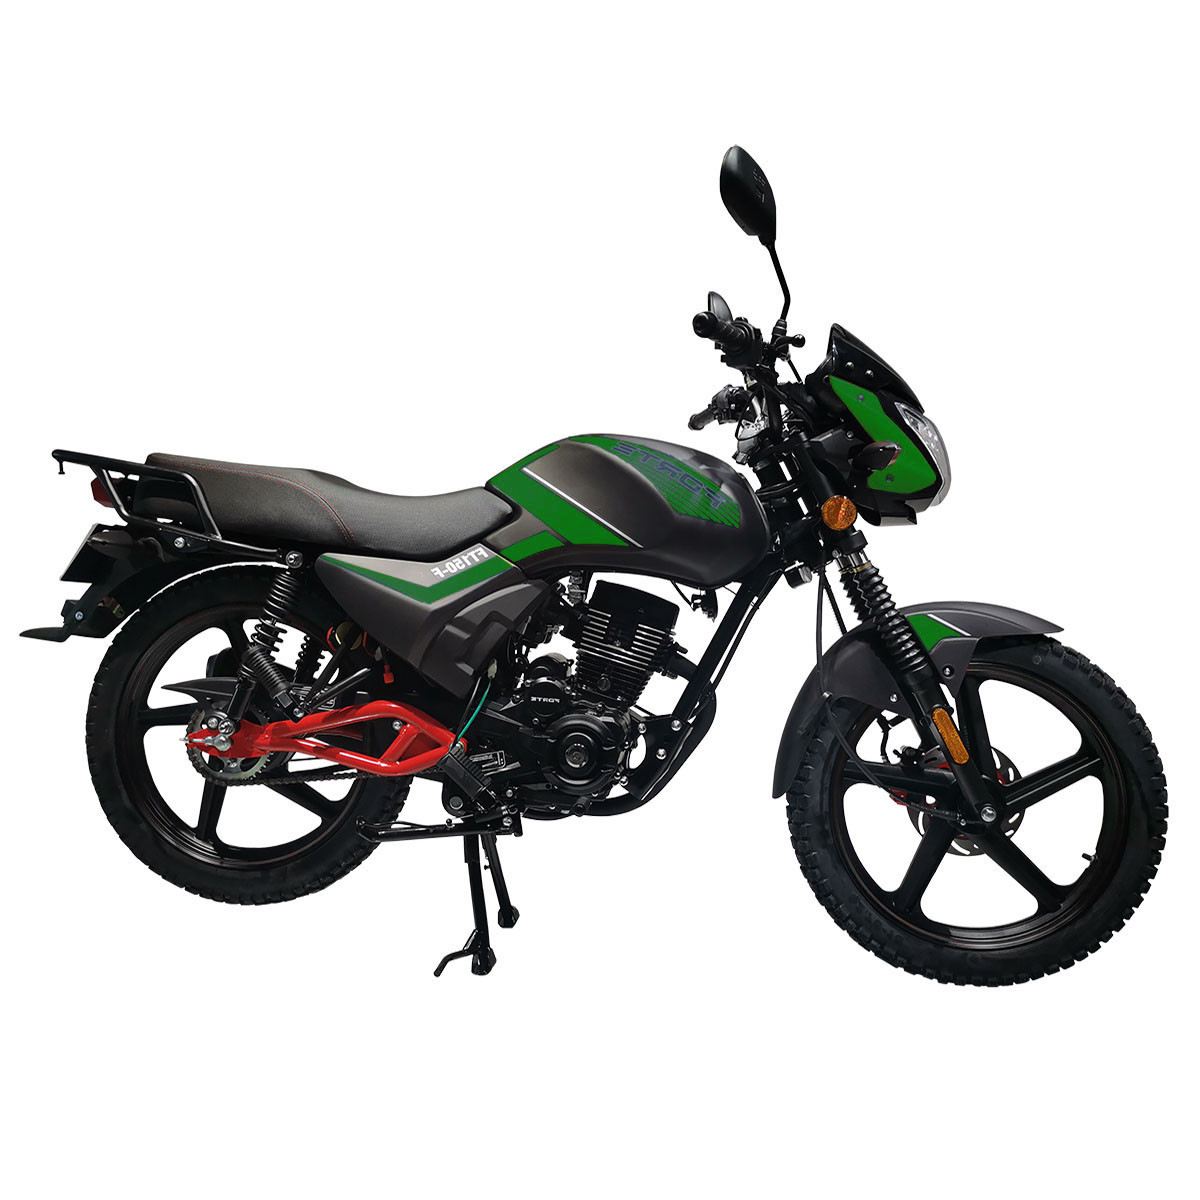 Мотоцикл Forte FT150F (125282) зелений